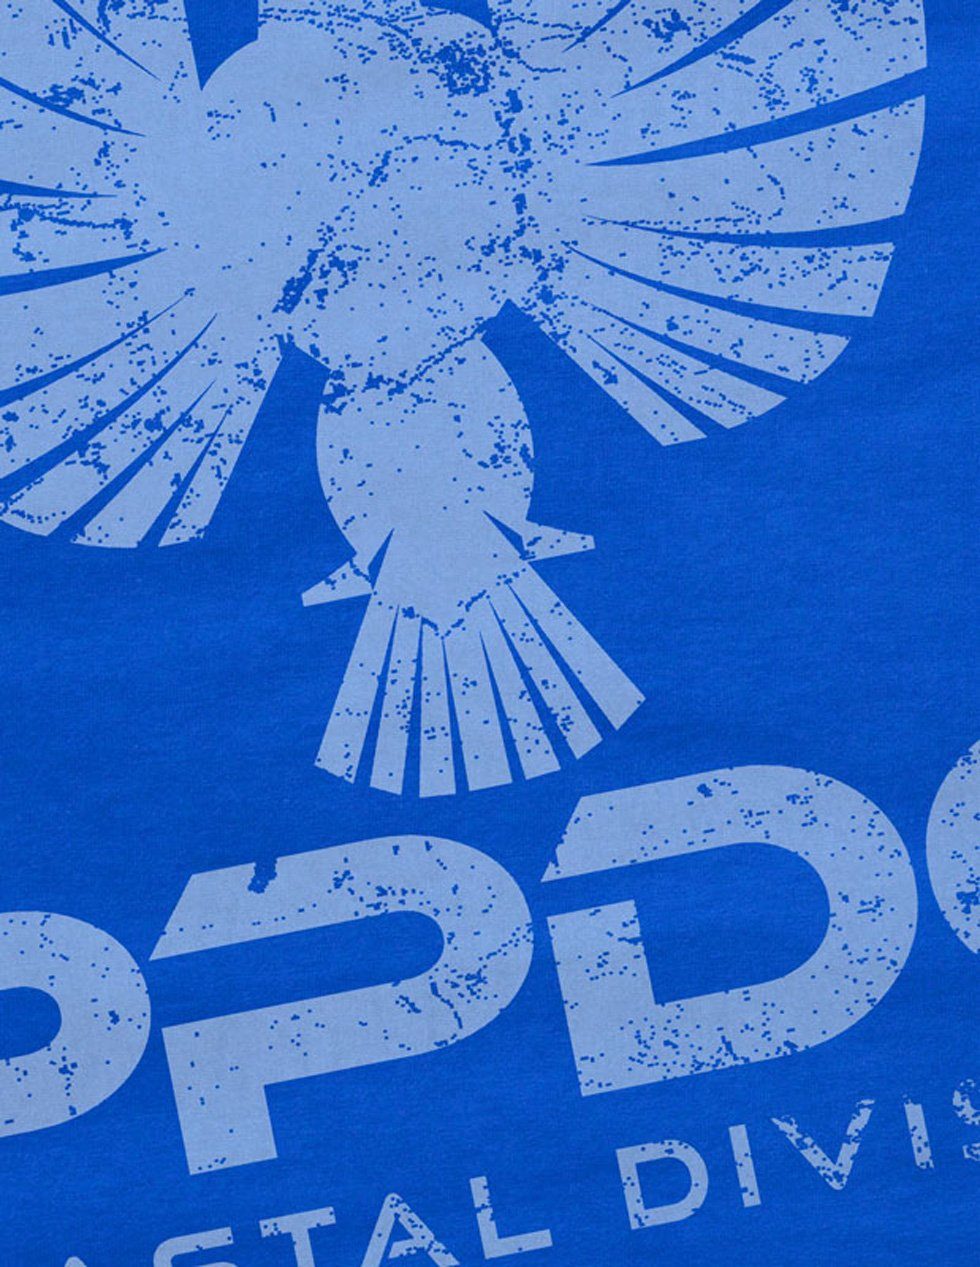 Pan Pacific abwehr Print-Shirt Kinder style3 Defense T-Shirt blau kaiju